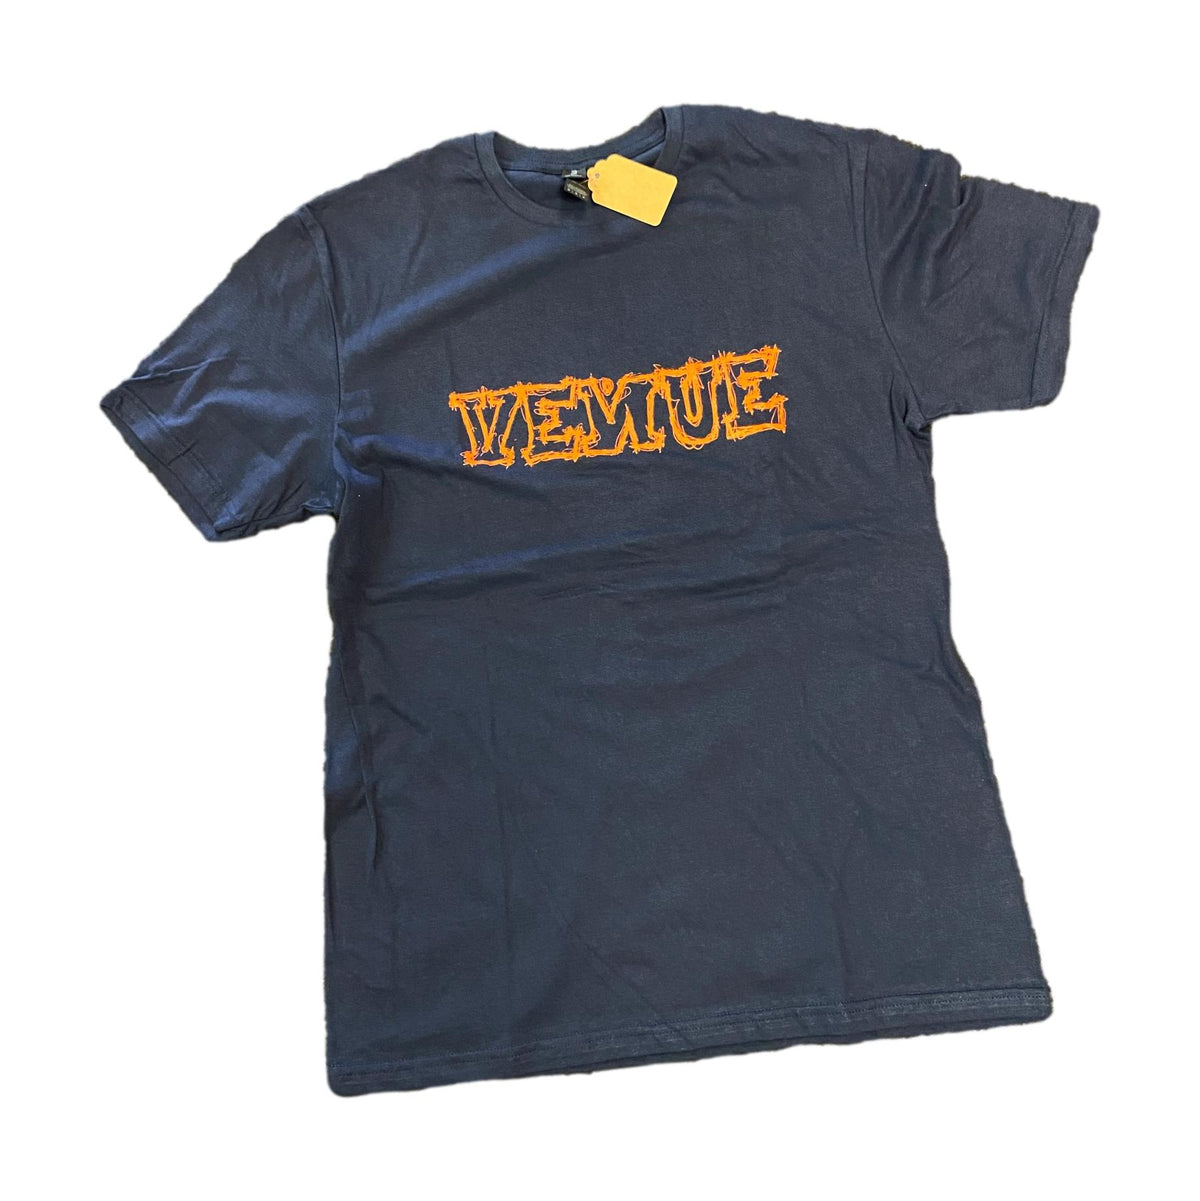 Venue Scratchy T-Shirt Navy/Orange - Venue Skateboards